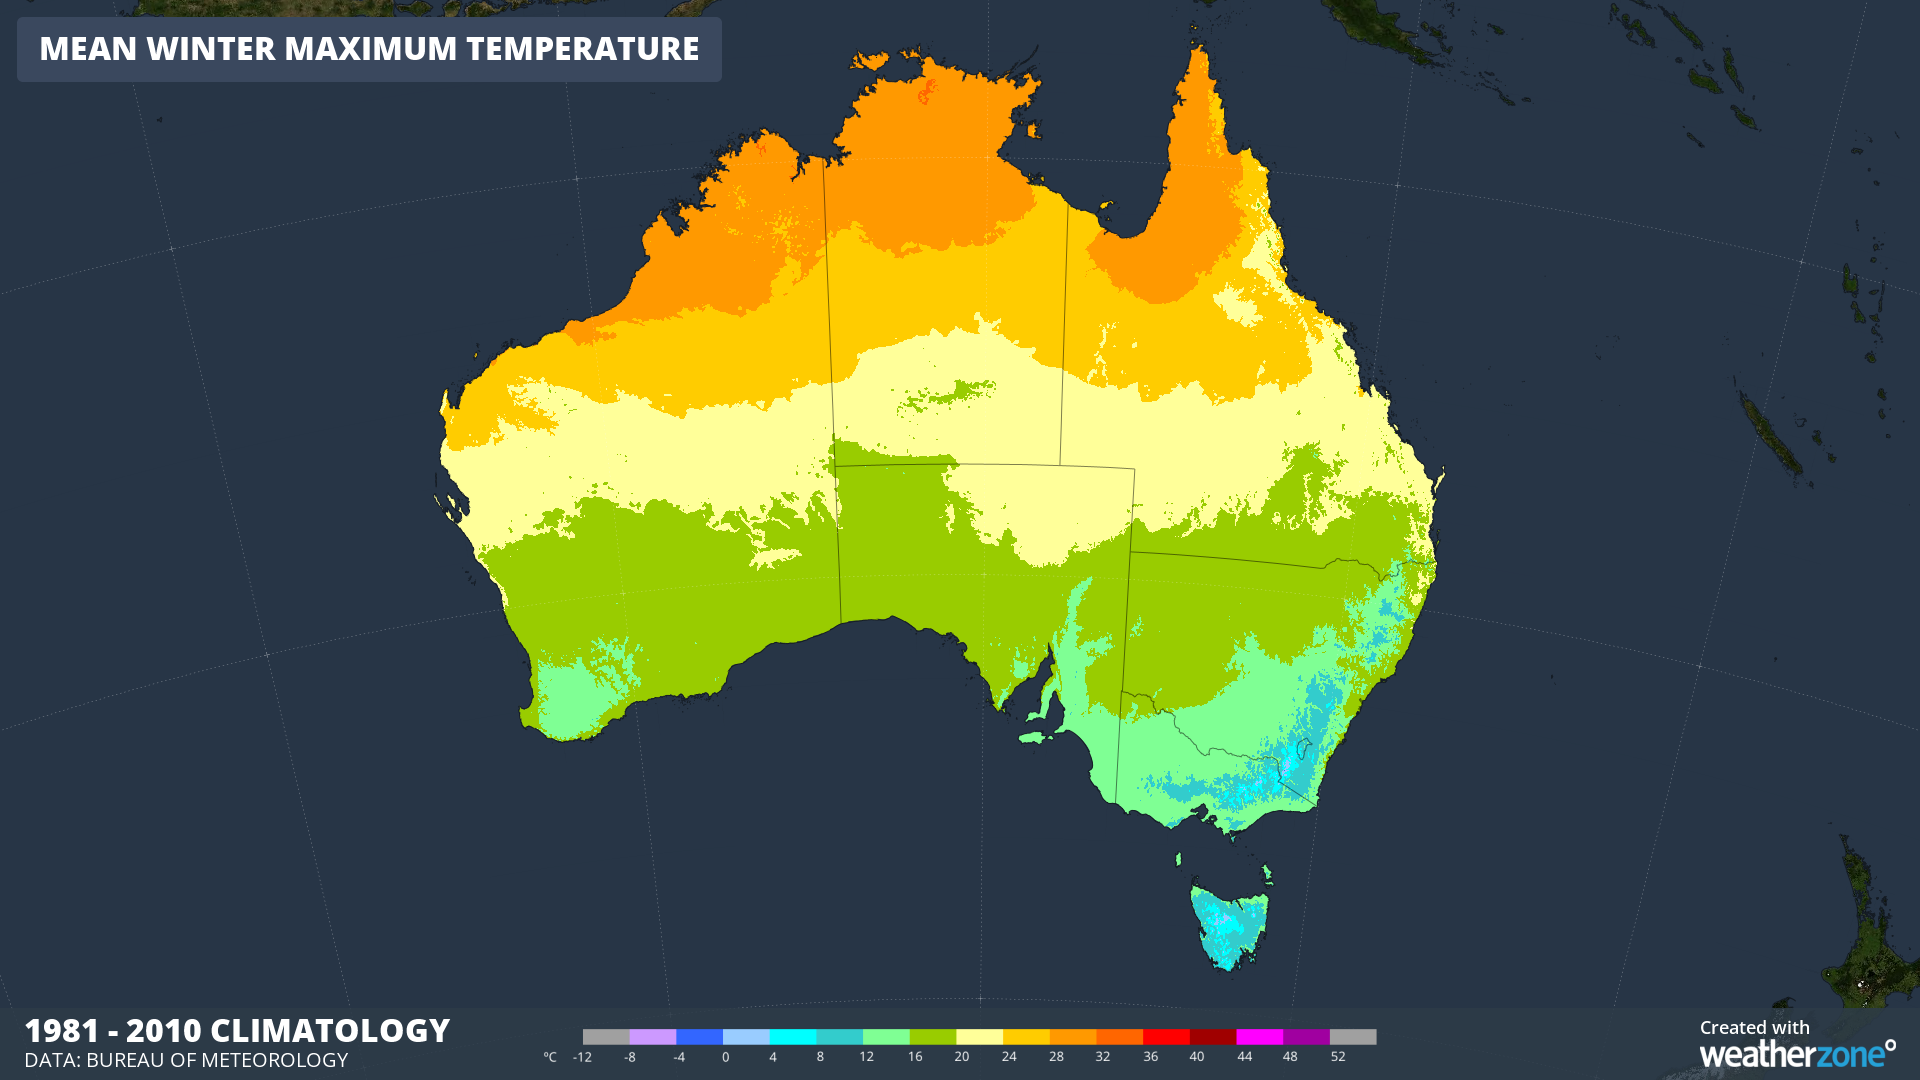 Australia facing 'abnormal' warm, dry winter